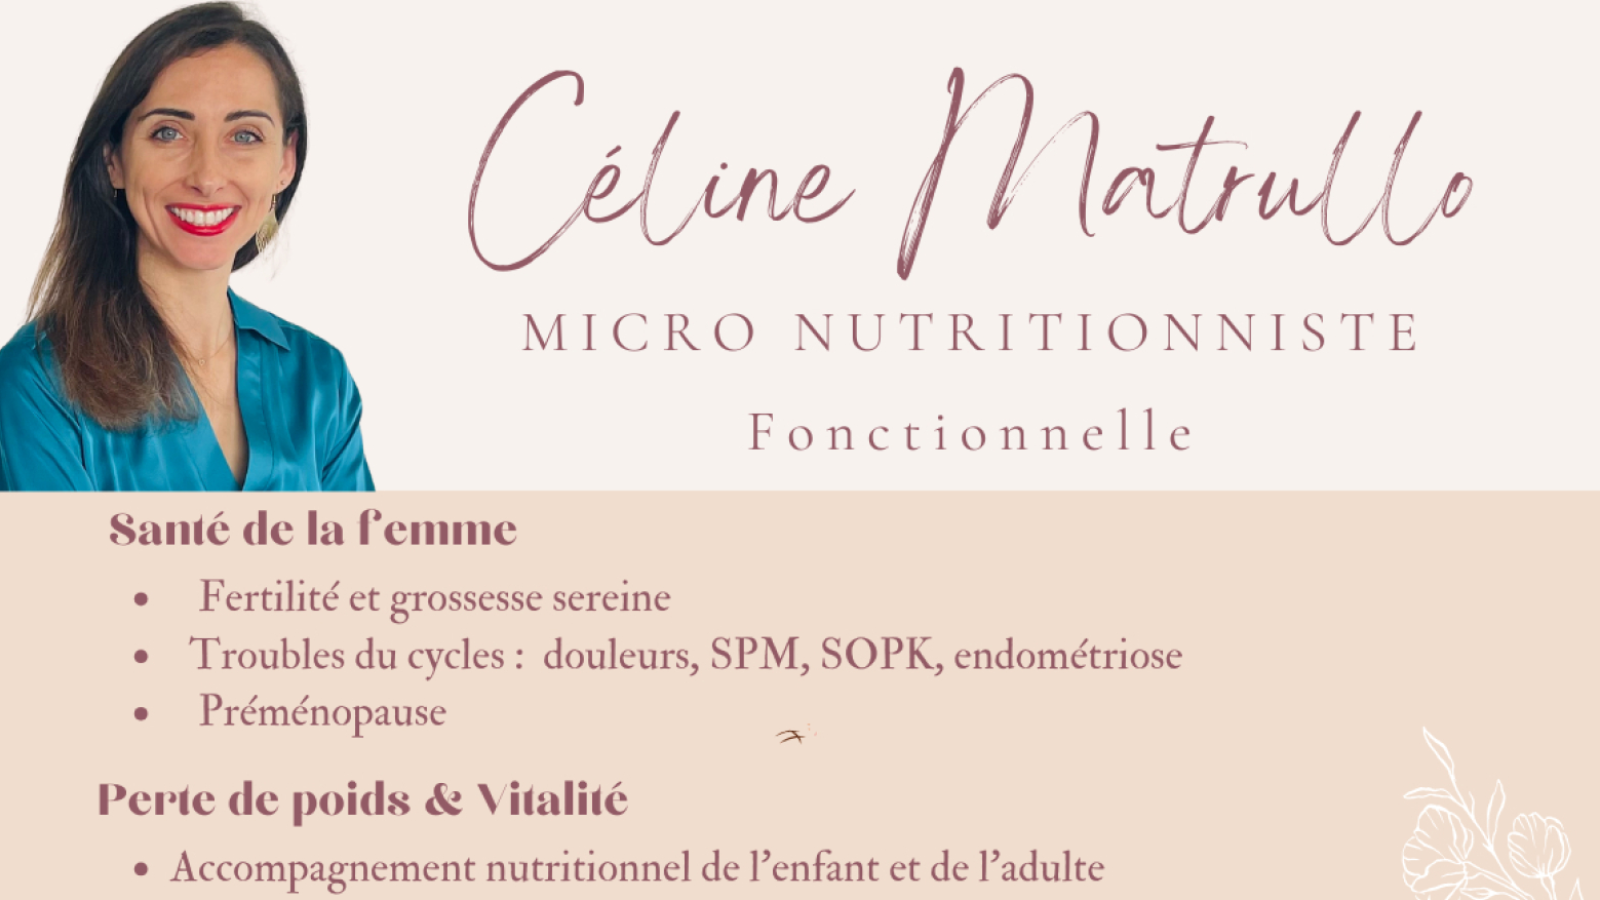 Céline Matrullo - Nutrinaissance